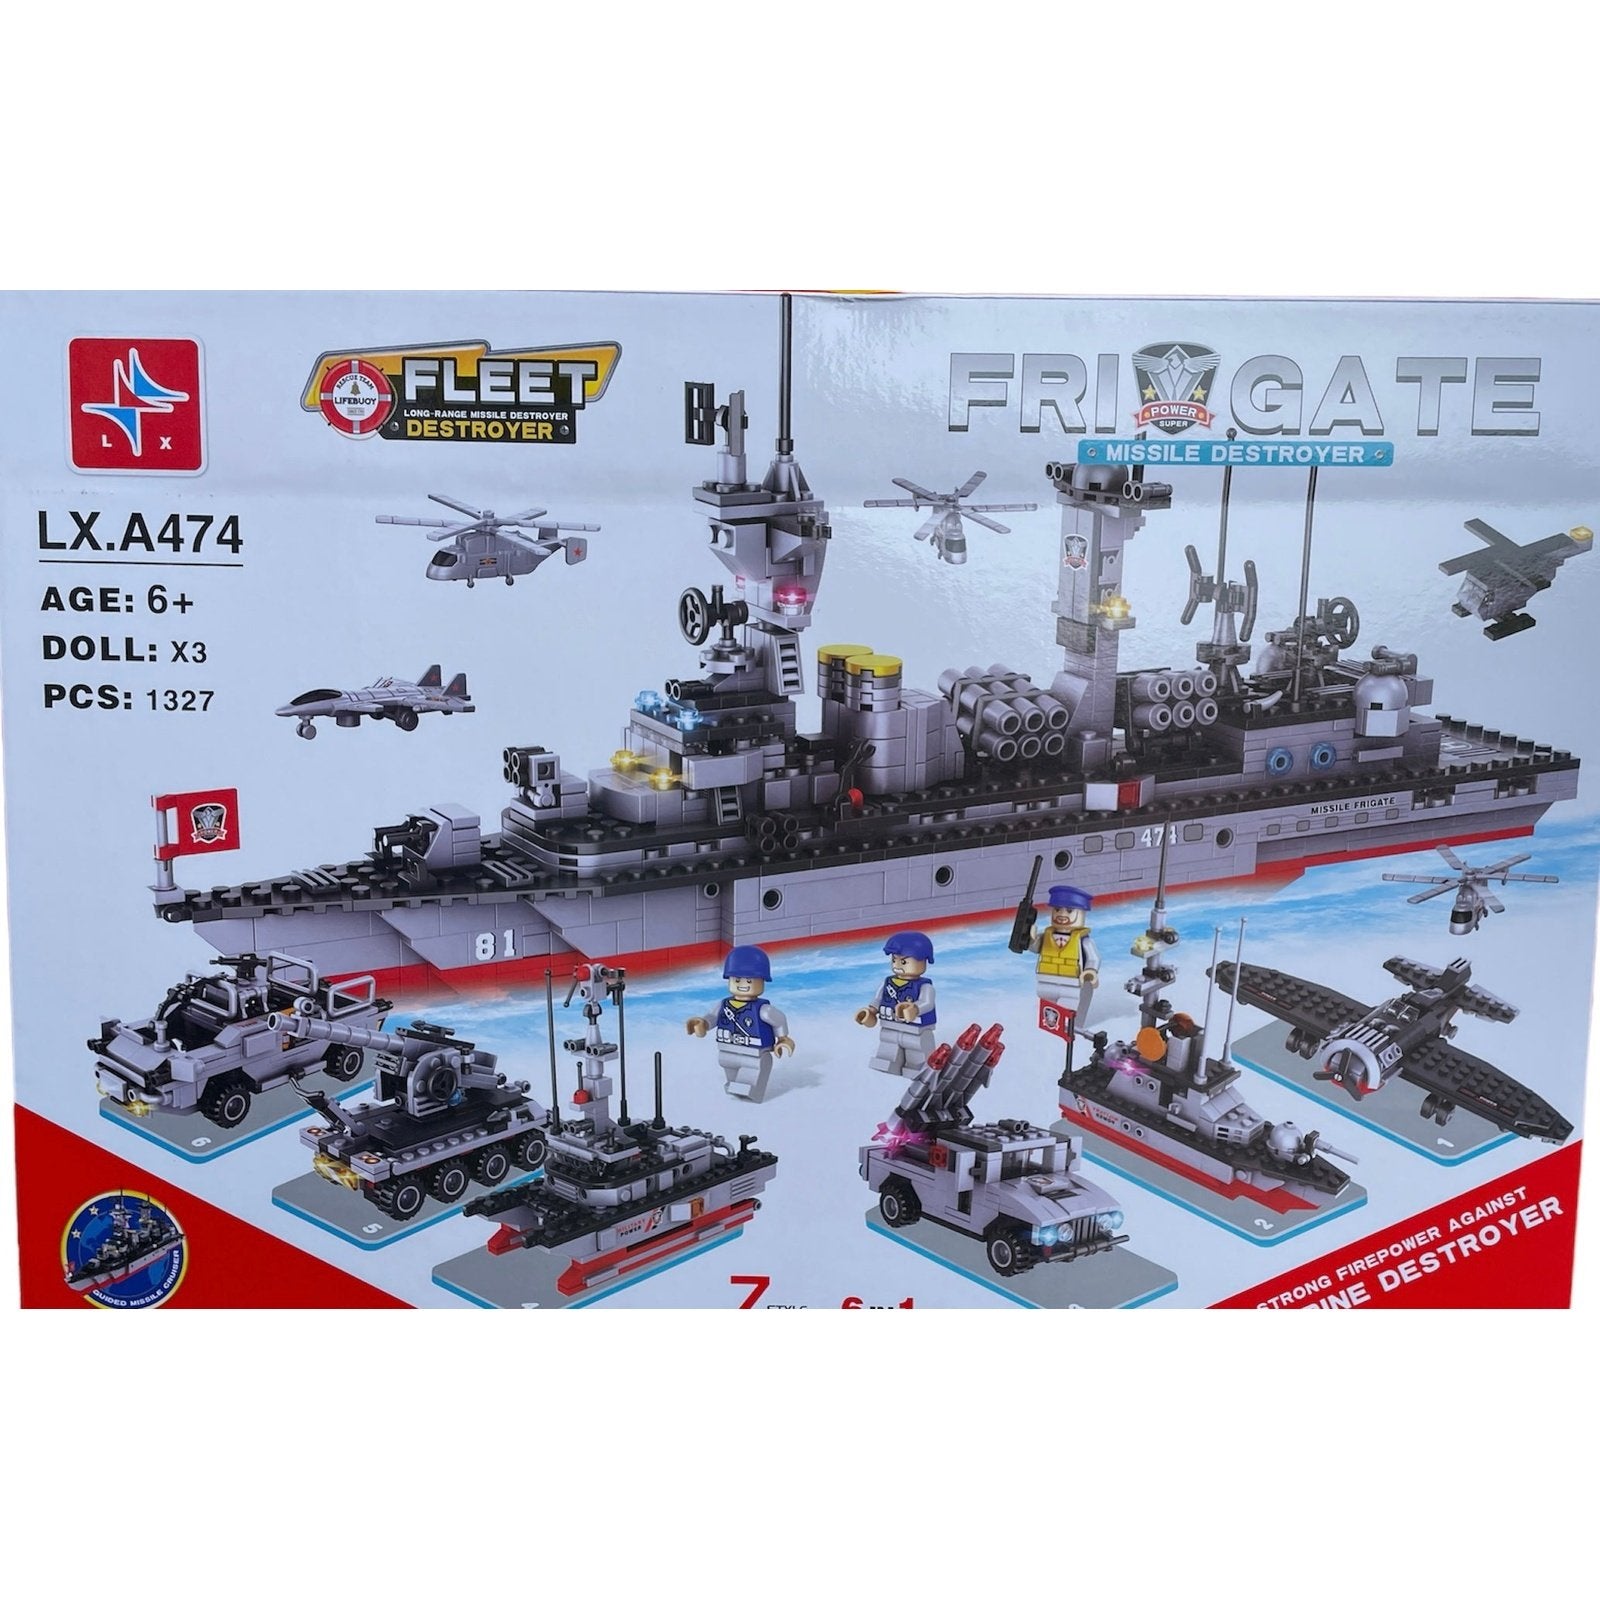 FRIGATE Missile Destroyer LXA474 Block Set Fun Toy For Kids - kidzbuzzz